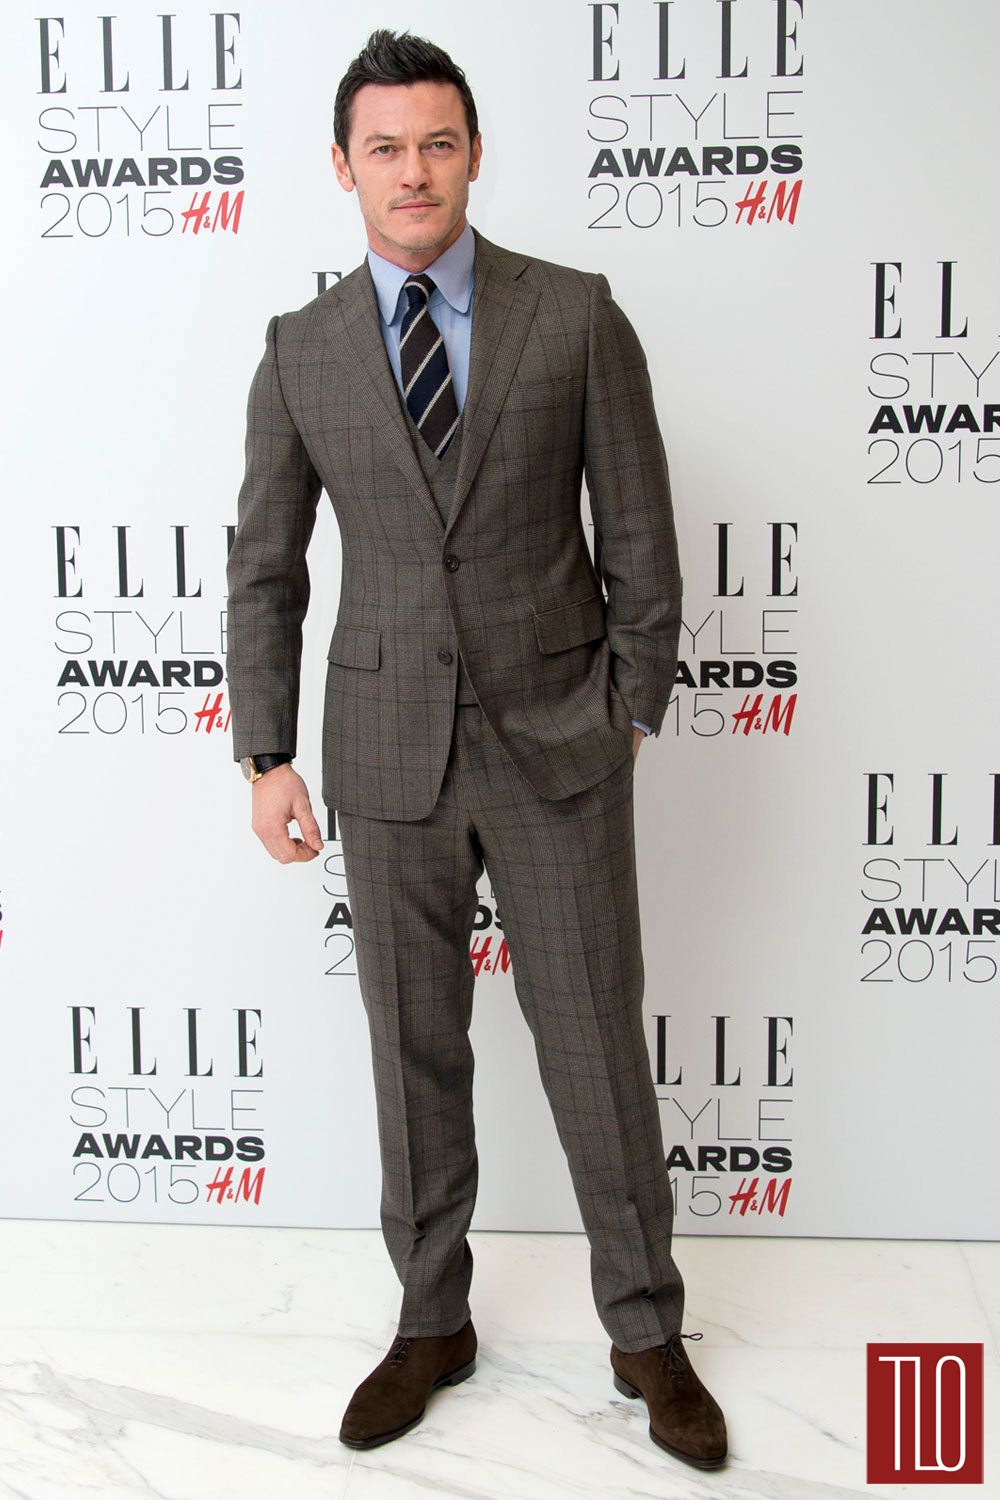 Luke-Evans-The-Hobbit-ELLE-Style-Awards-Red-Carpet-Fashion-Menswear-Thom-Sweeney-Tom-Lorenzo-Site-TLO (1)